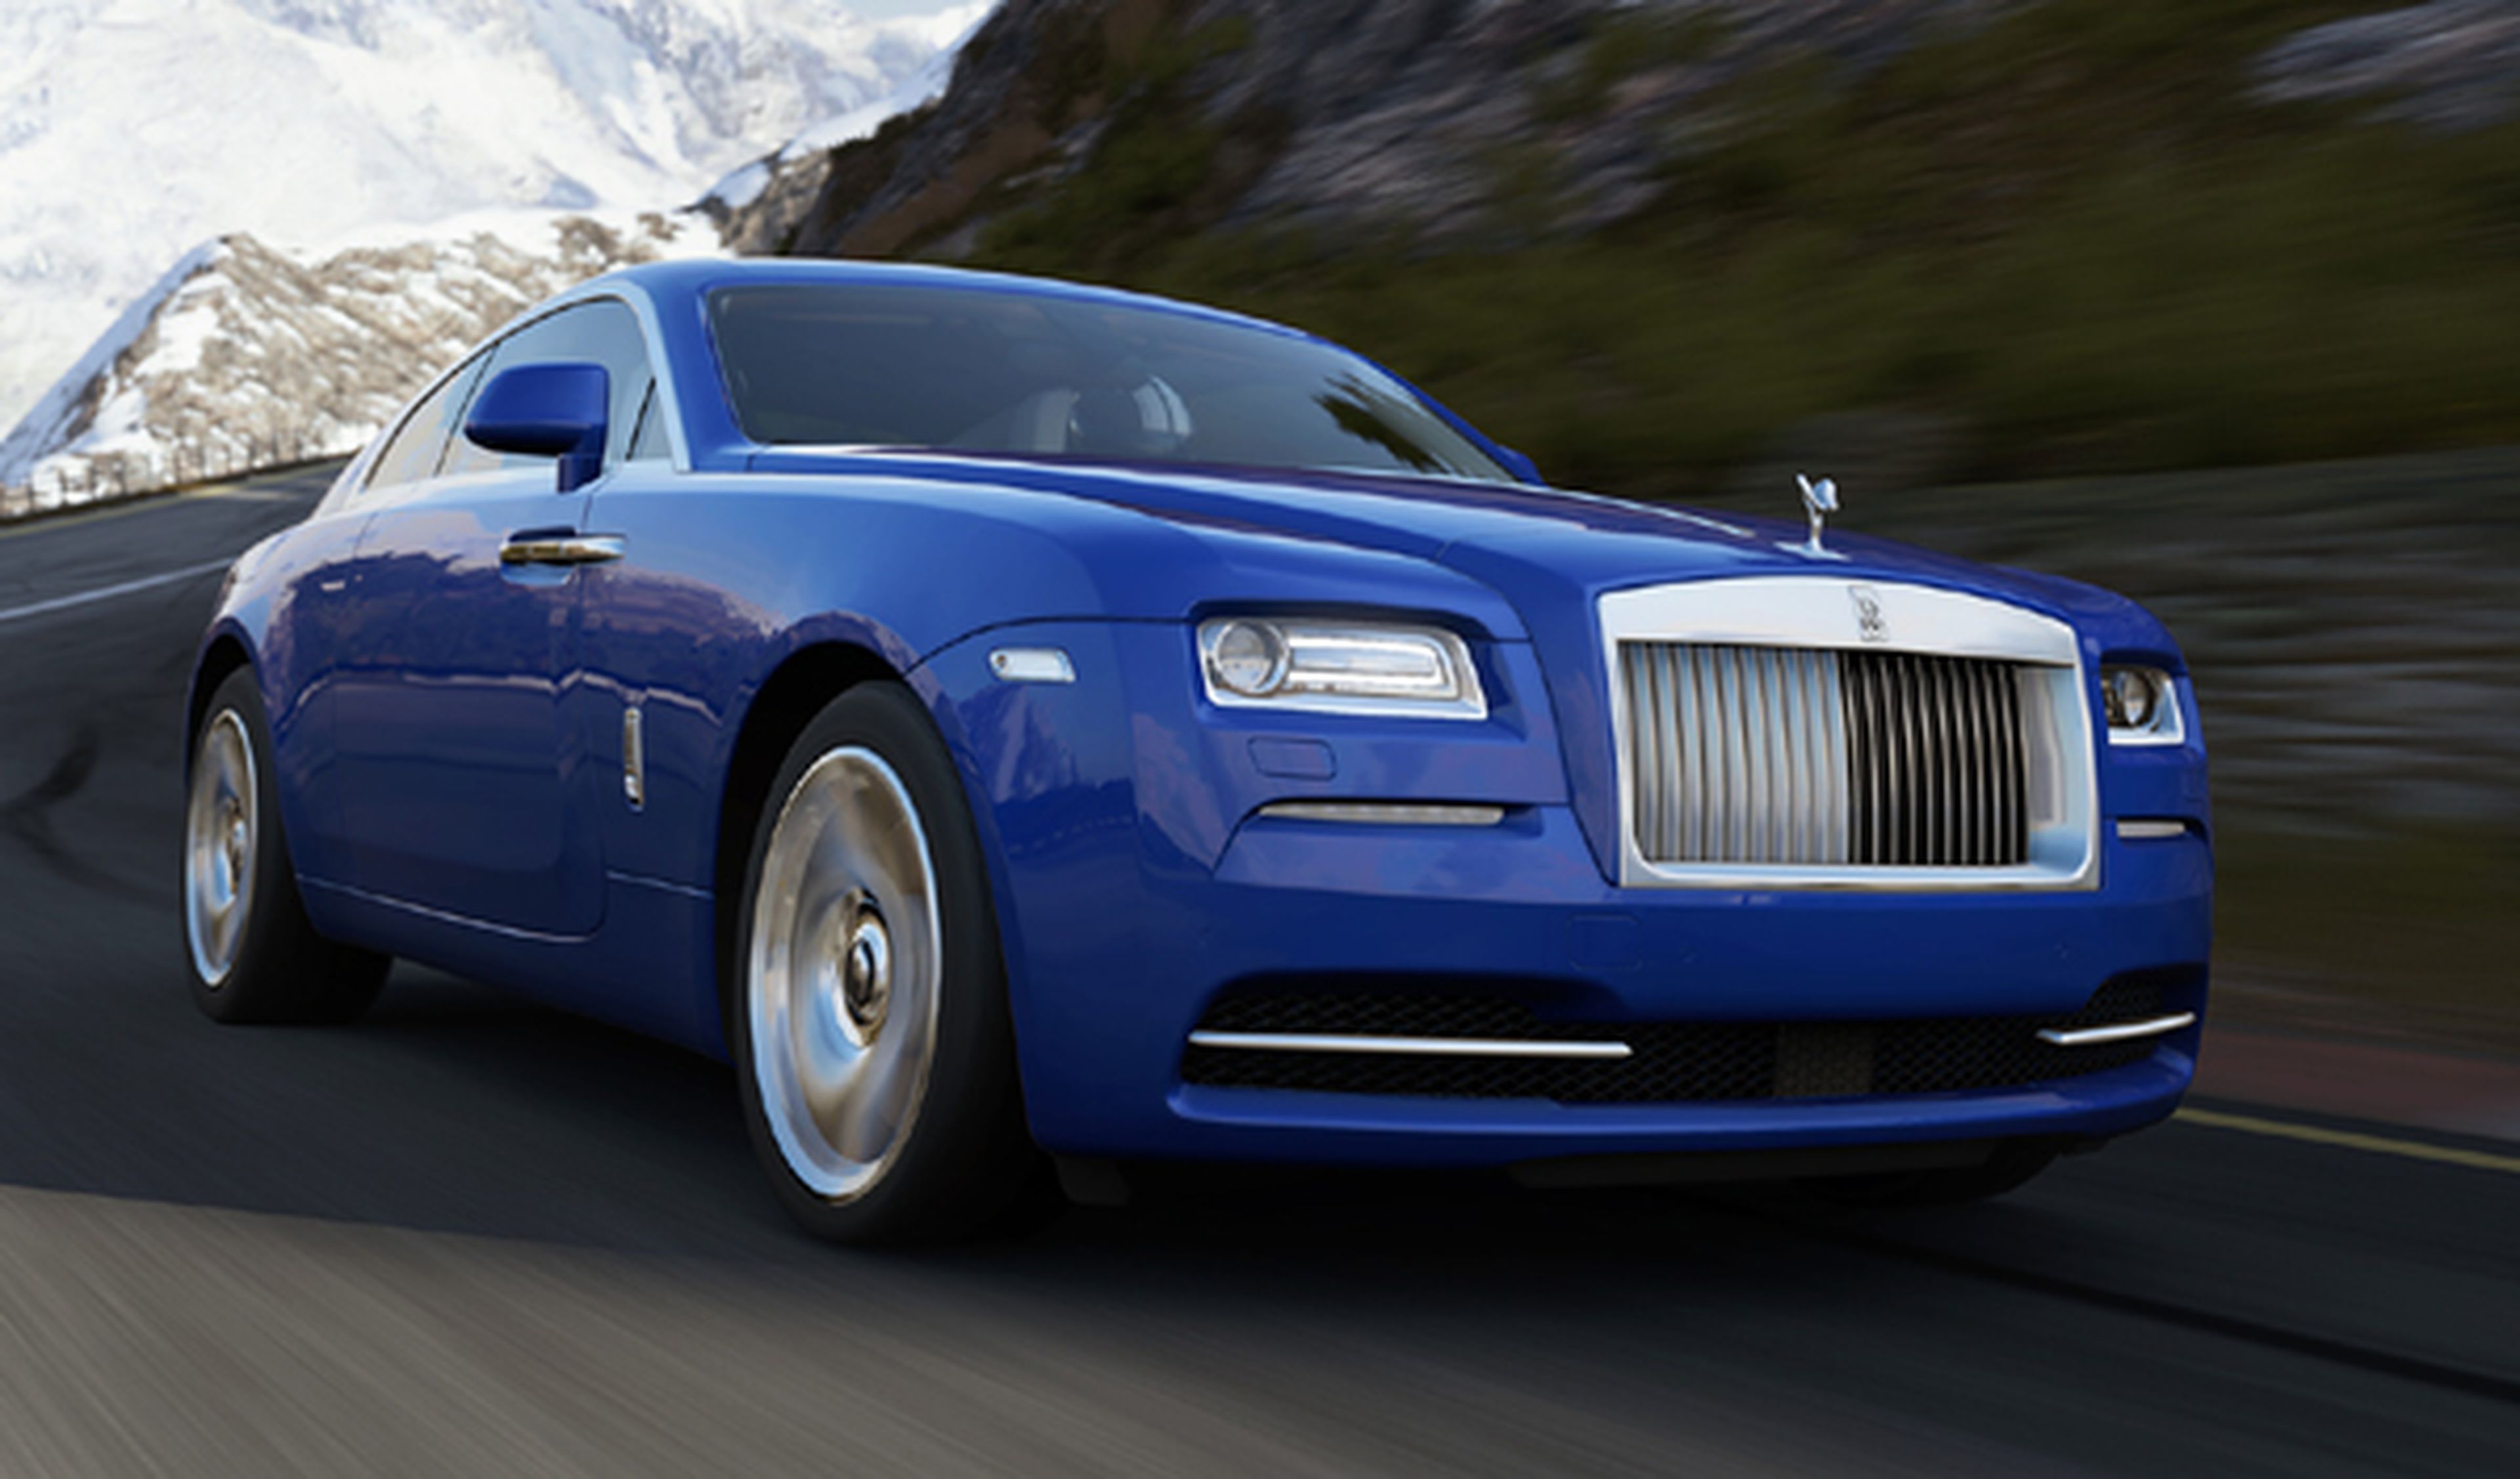 Rolls-Royce Wraith Forza Motorsport 5